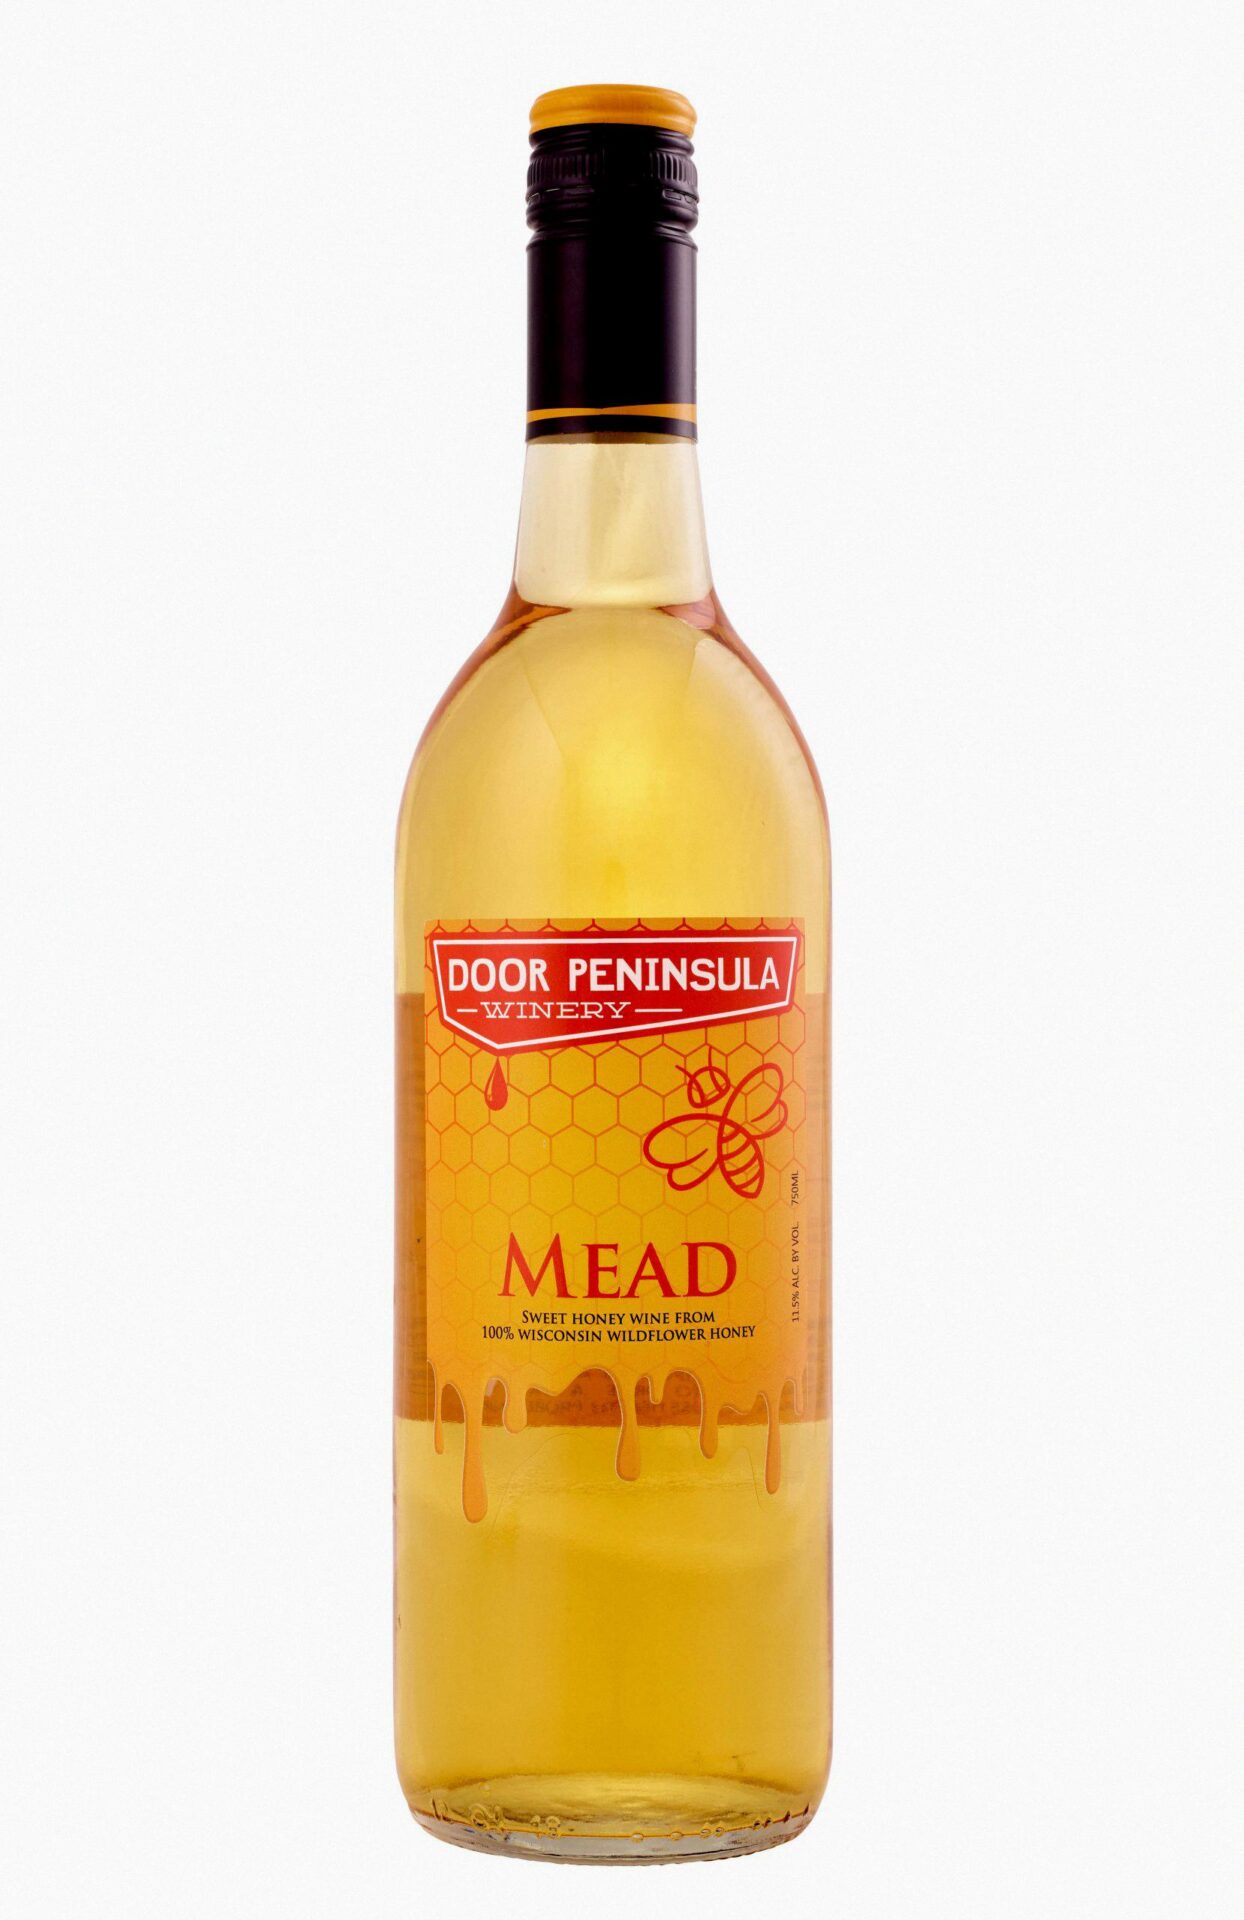 mead vs wine